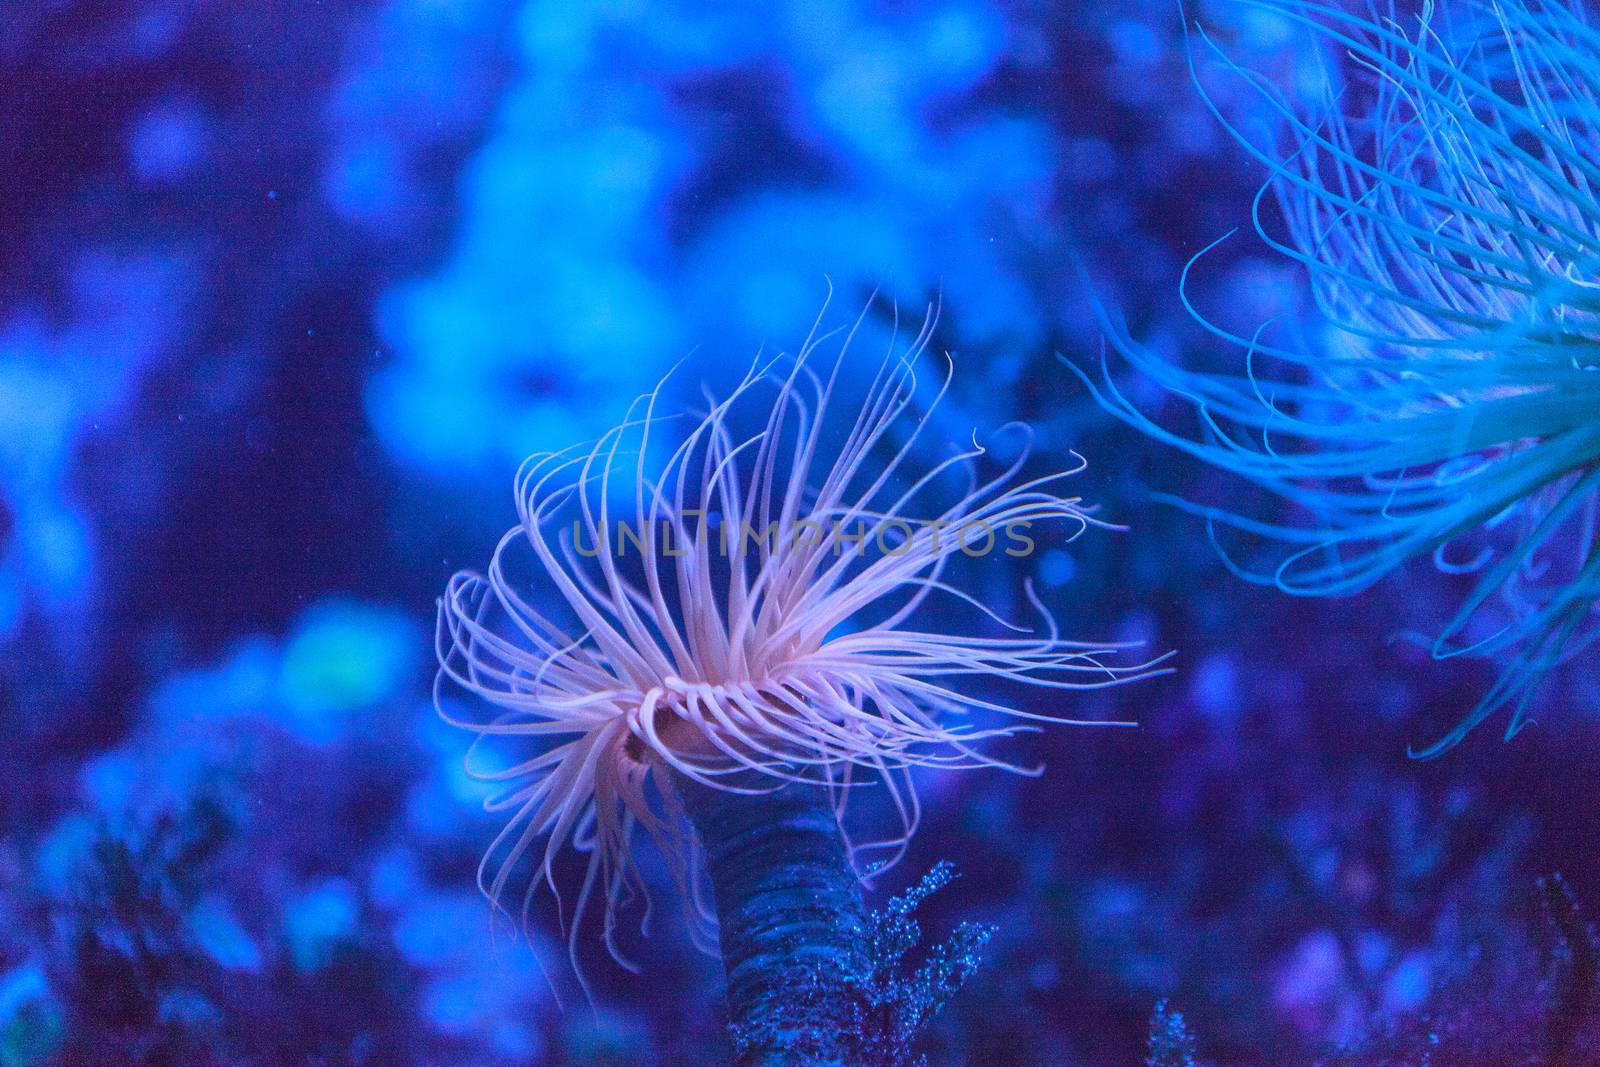 Tube anemone by steffstarr